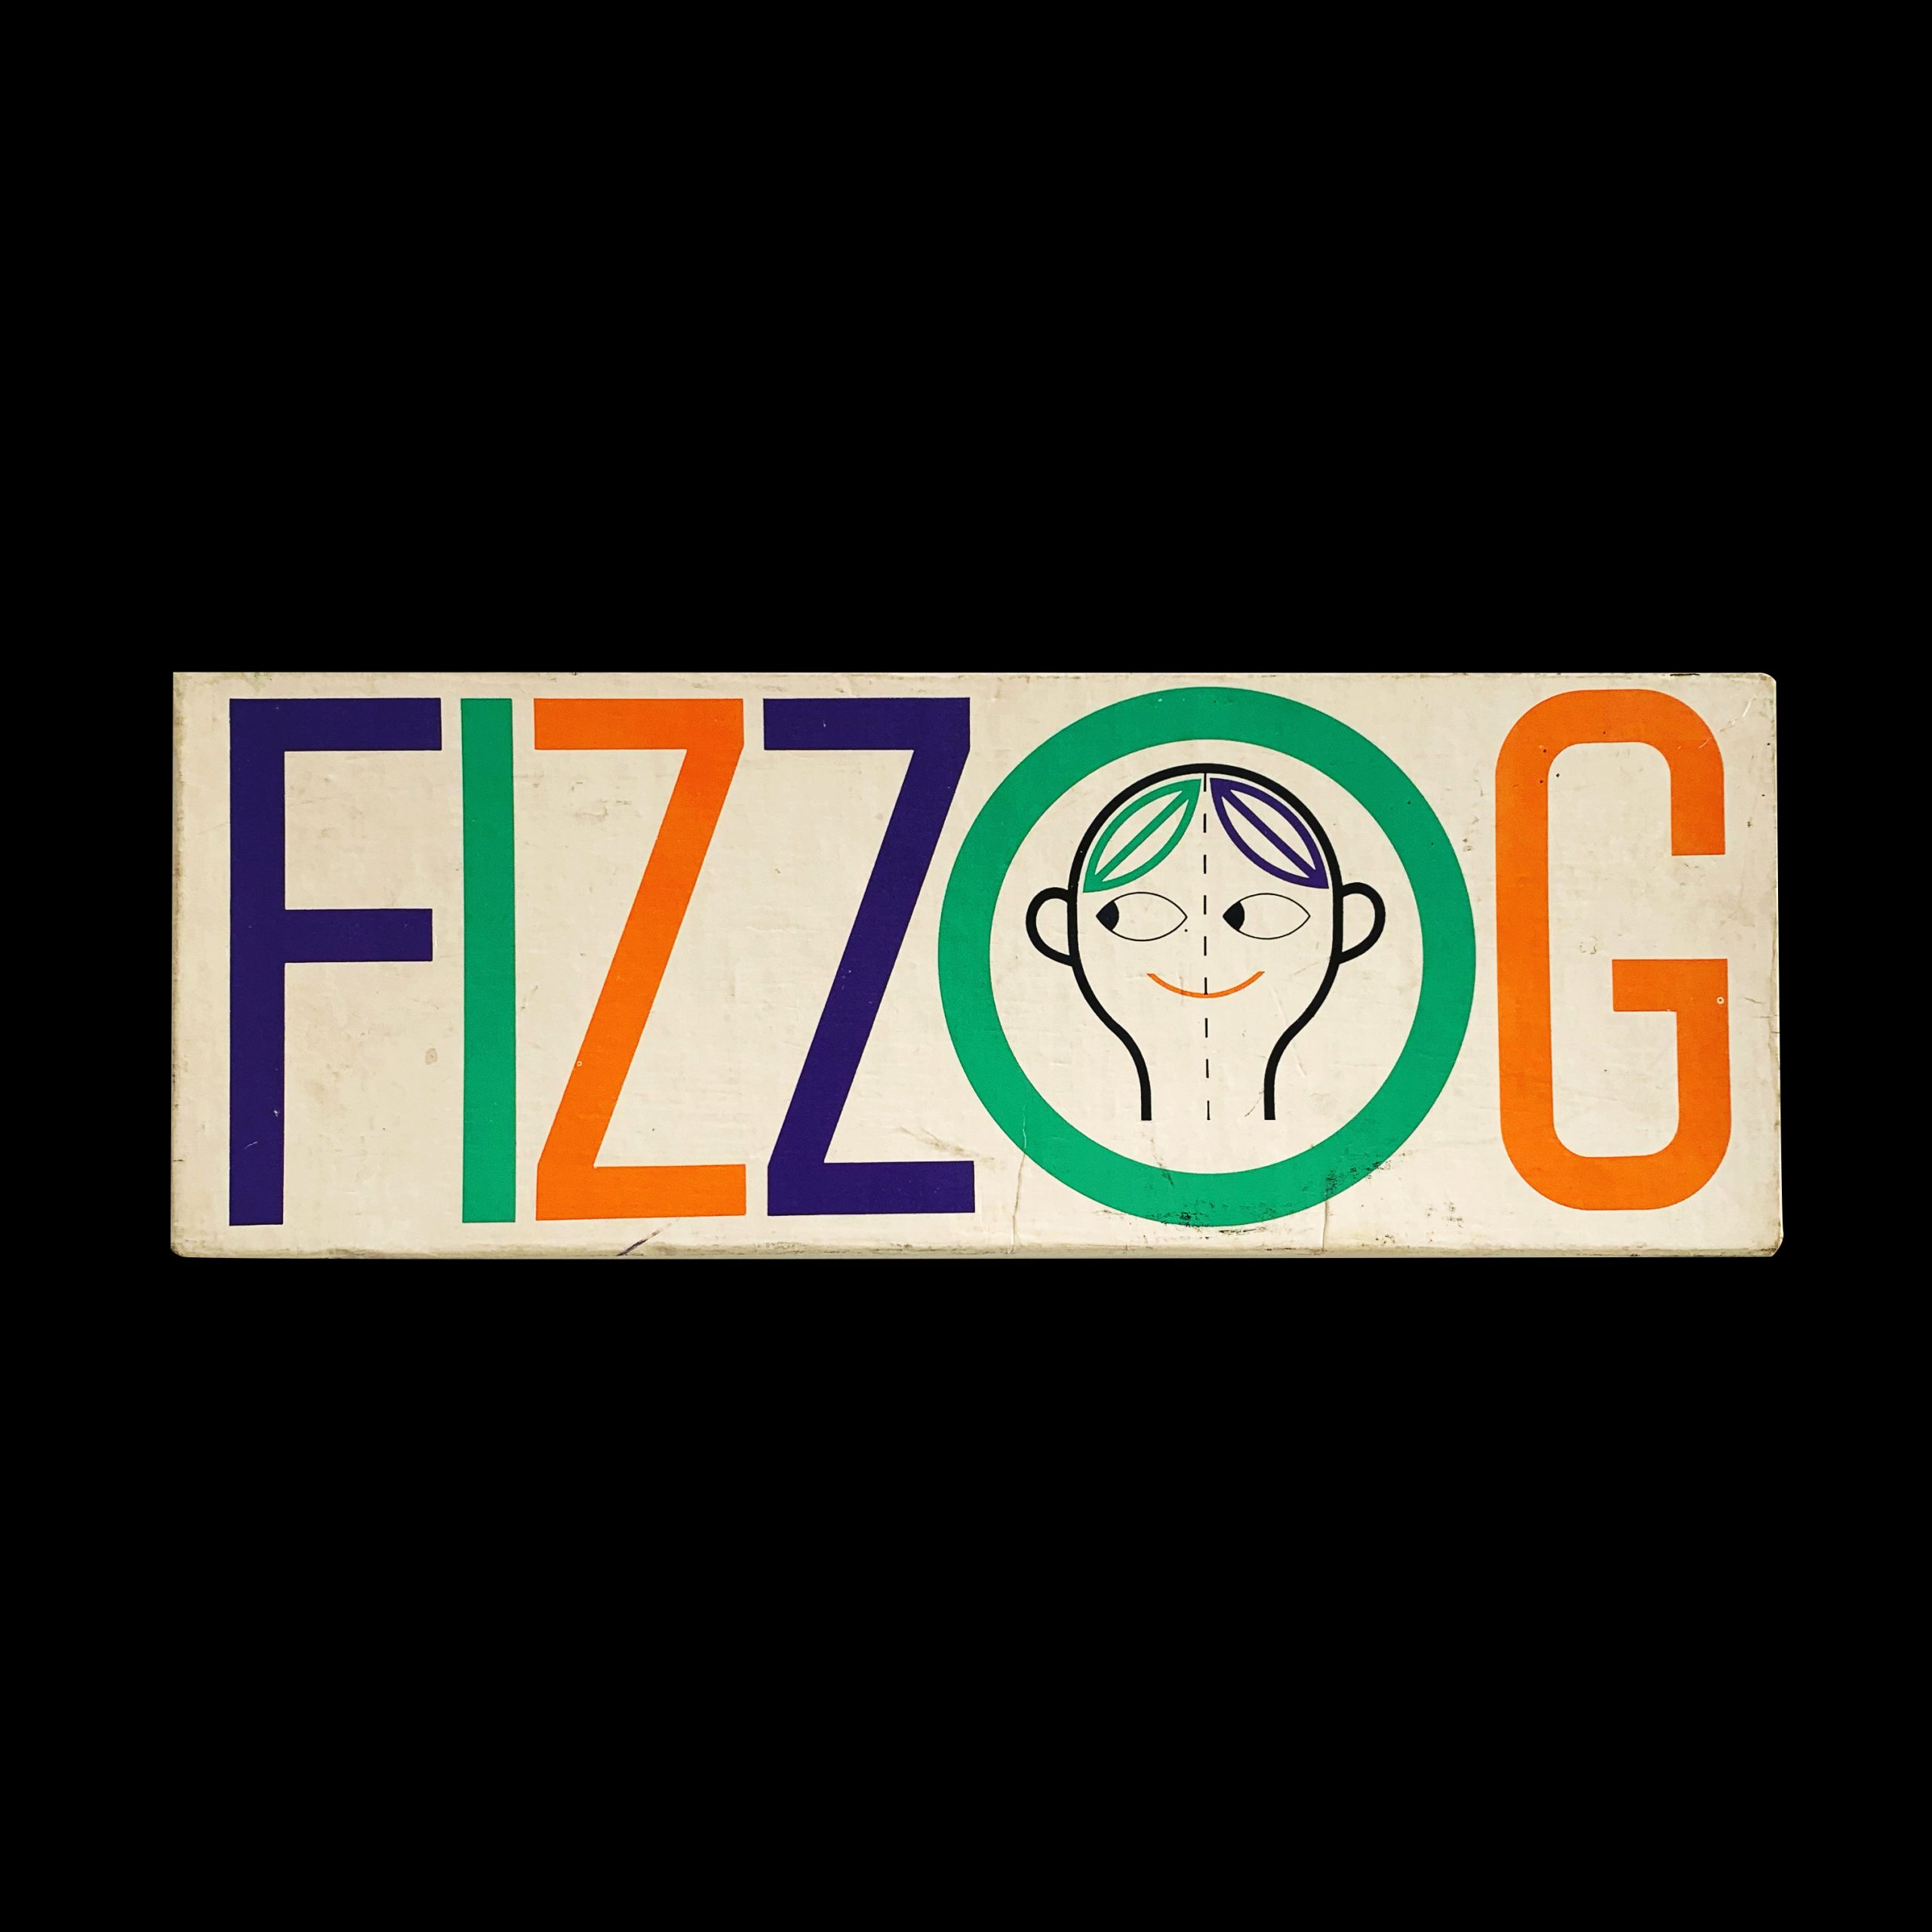 Fizzog Game designed by Ken Garland